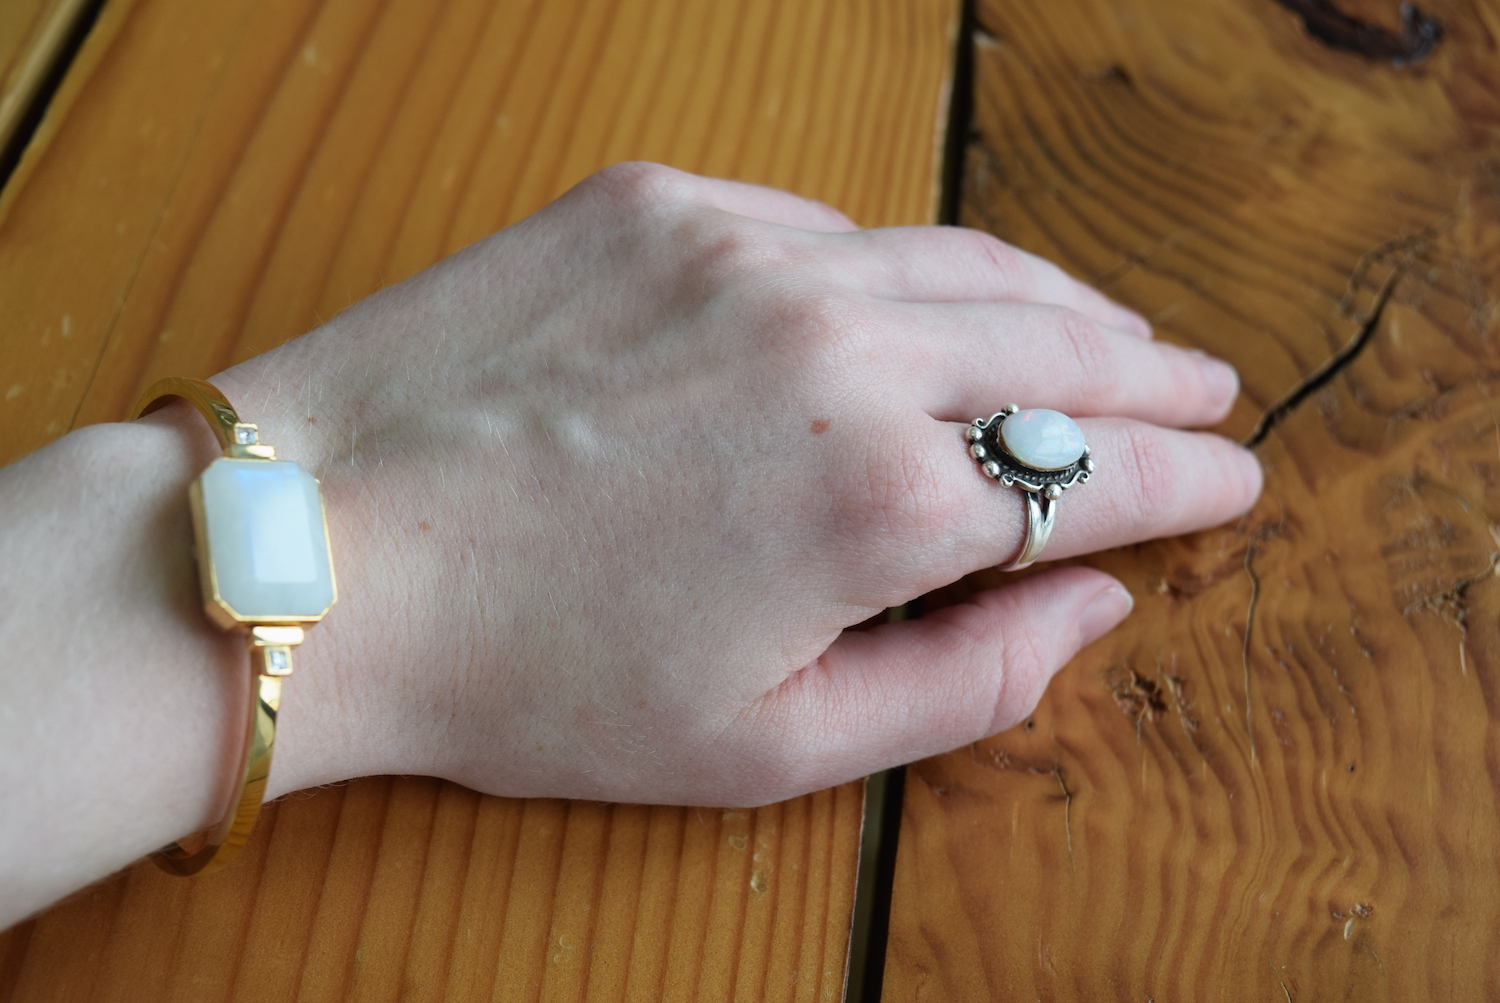 Ringly smart ring Australian review: wearable tech jewellery | news.com.au  — Australia's leading news site